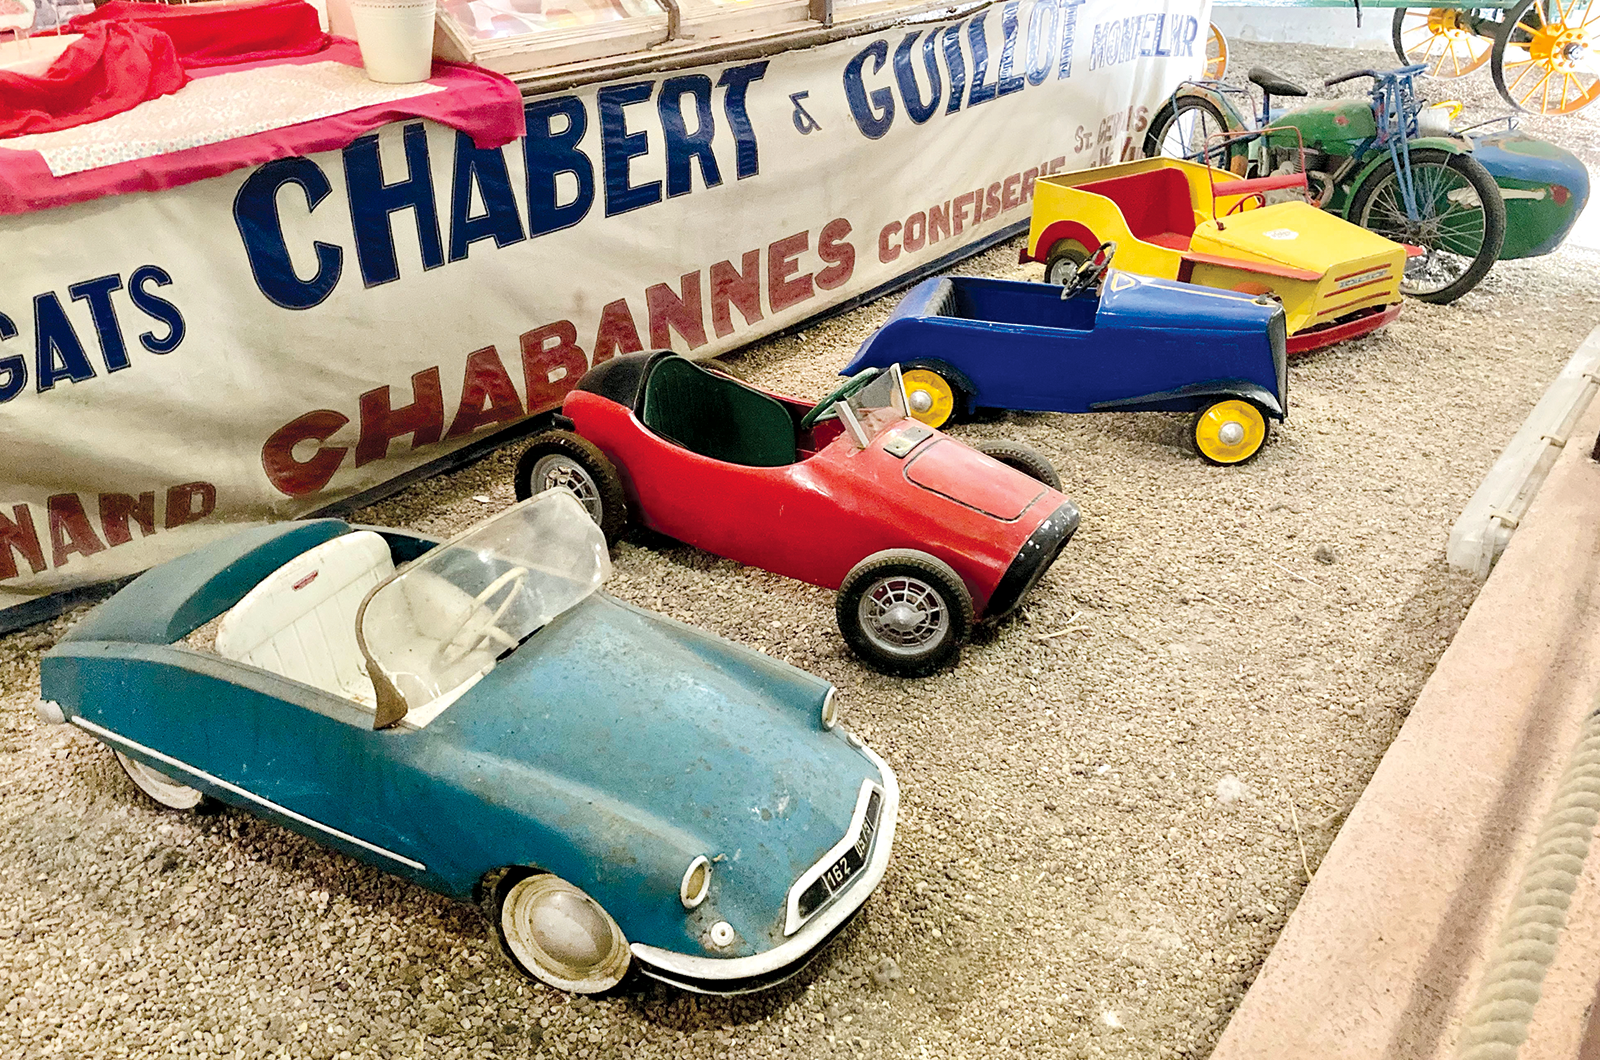 Classic & Sports Car – Classic shrine: Musée Maurice Dufresne